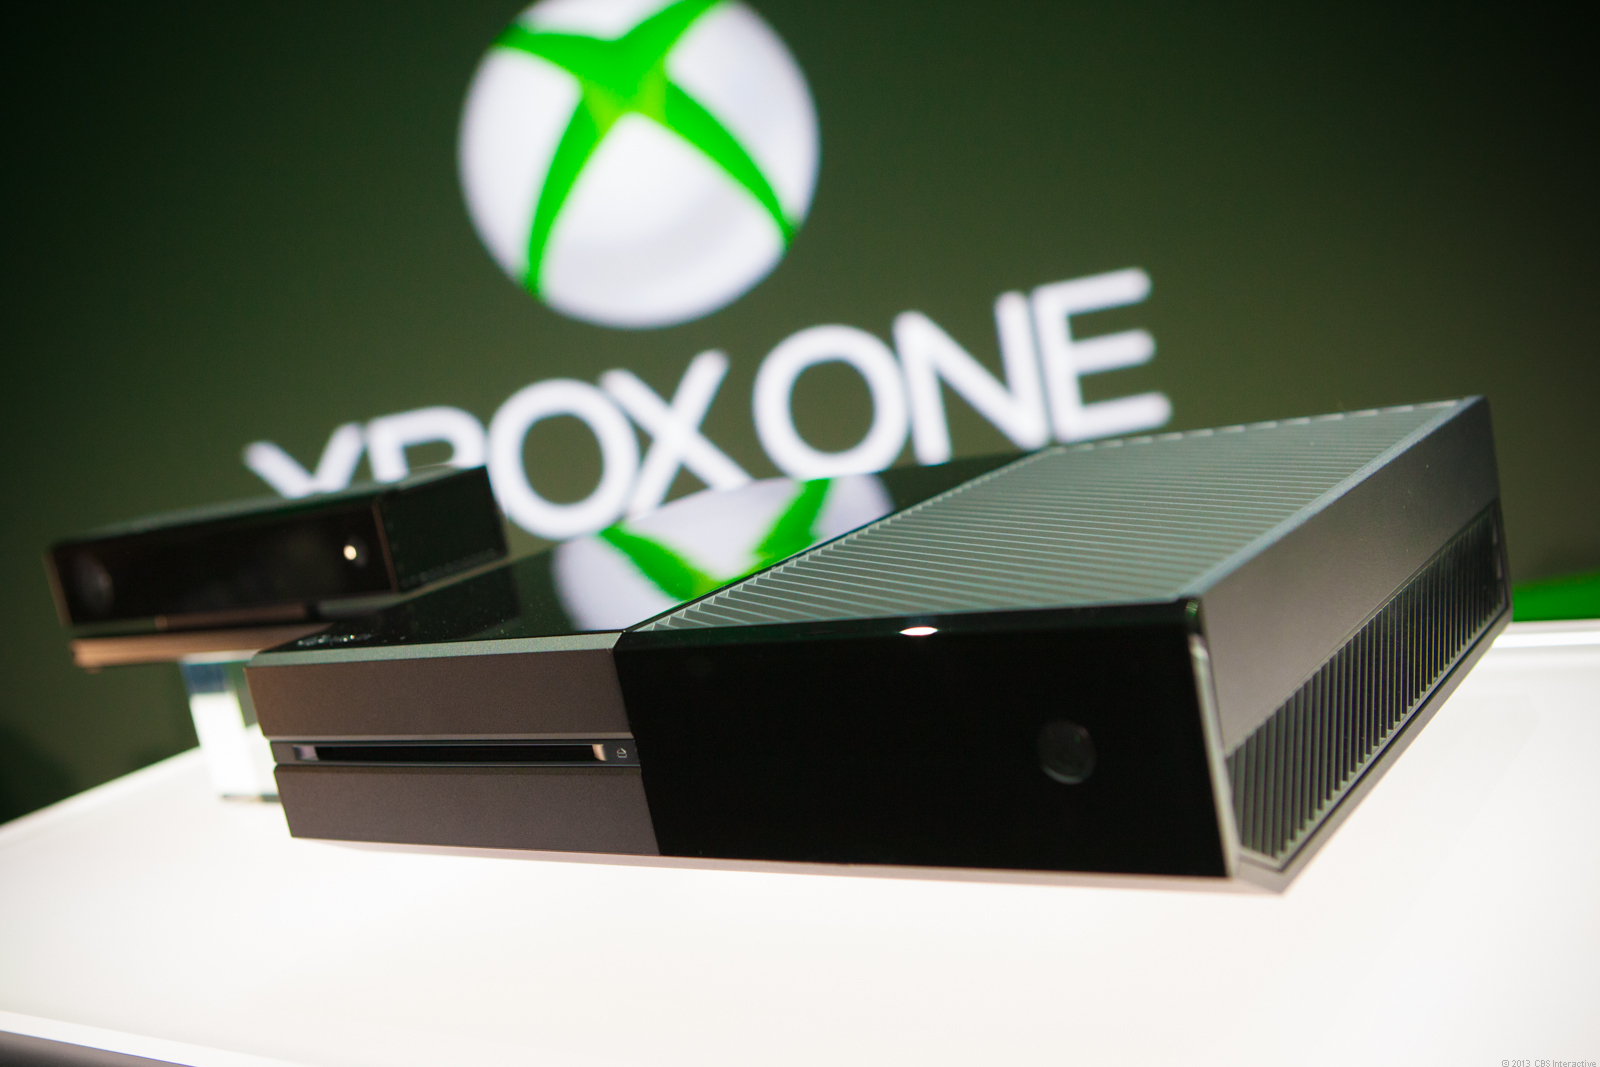 Xbox One Lifespan: 10 Years Always Switched On